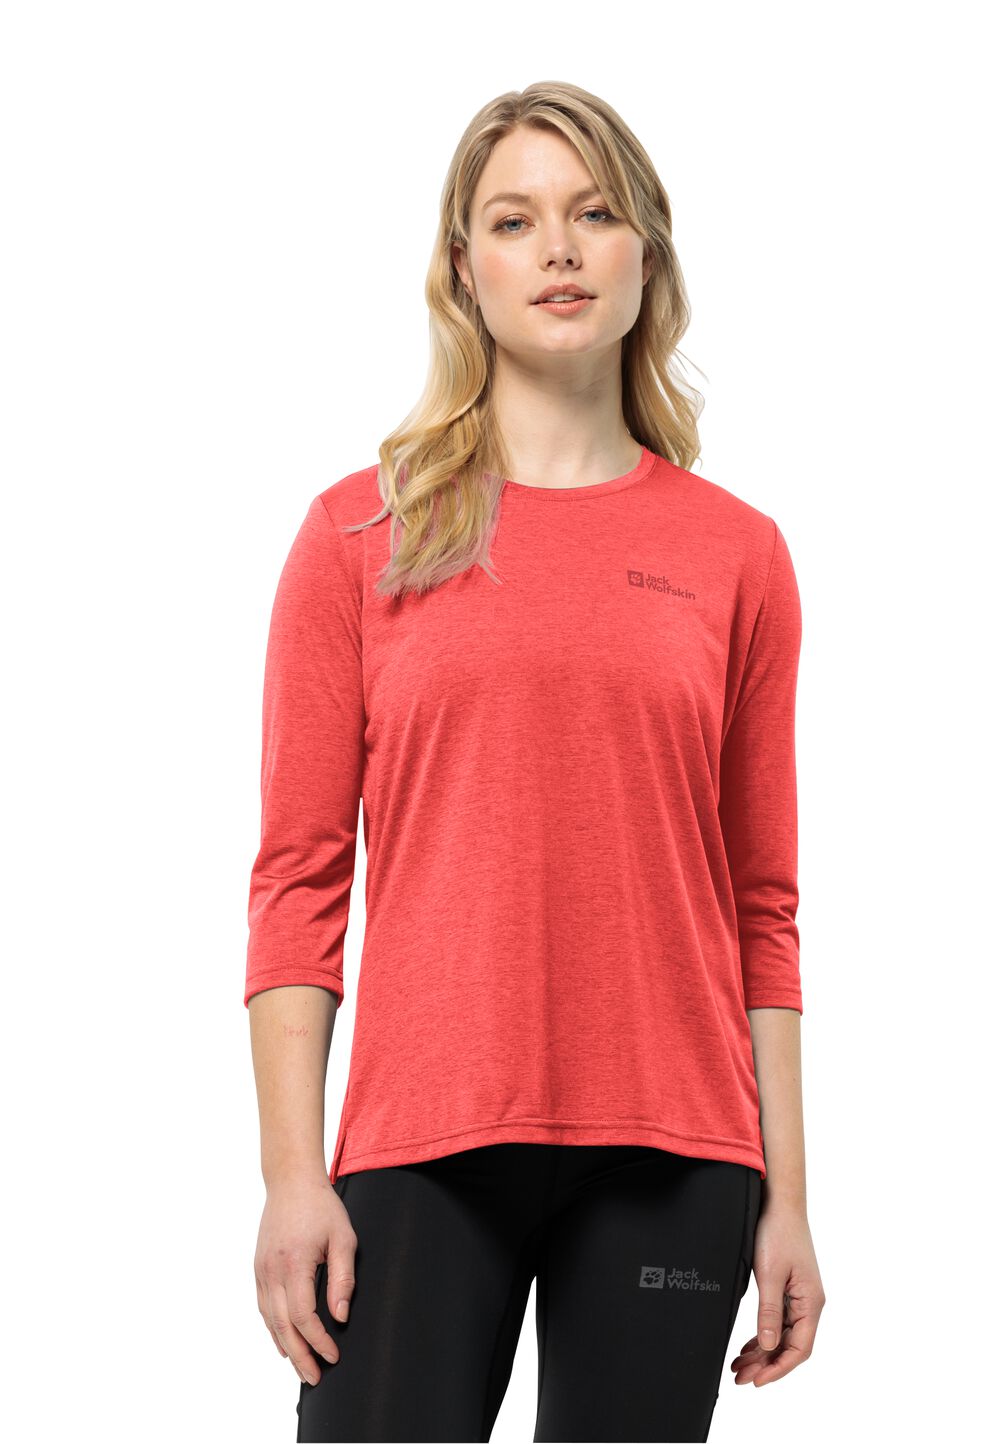 Jack Wolfskin Crosstrail 3 4 T-Shirt Women Functioneel shirt Dames XS rood vibrant red